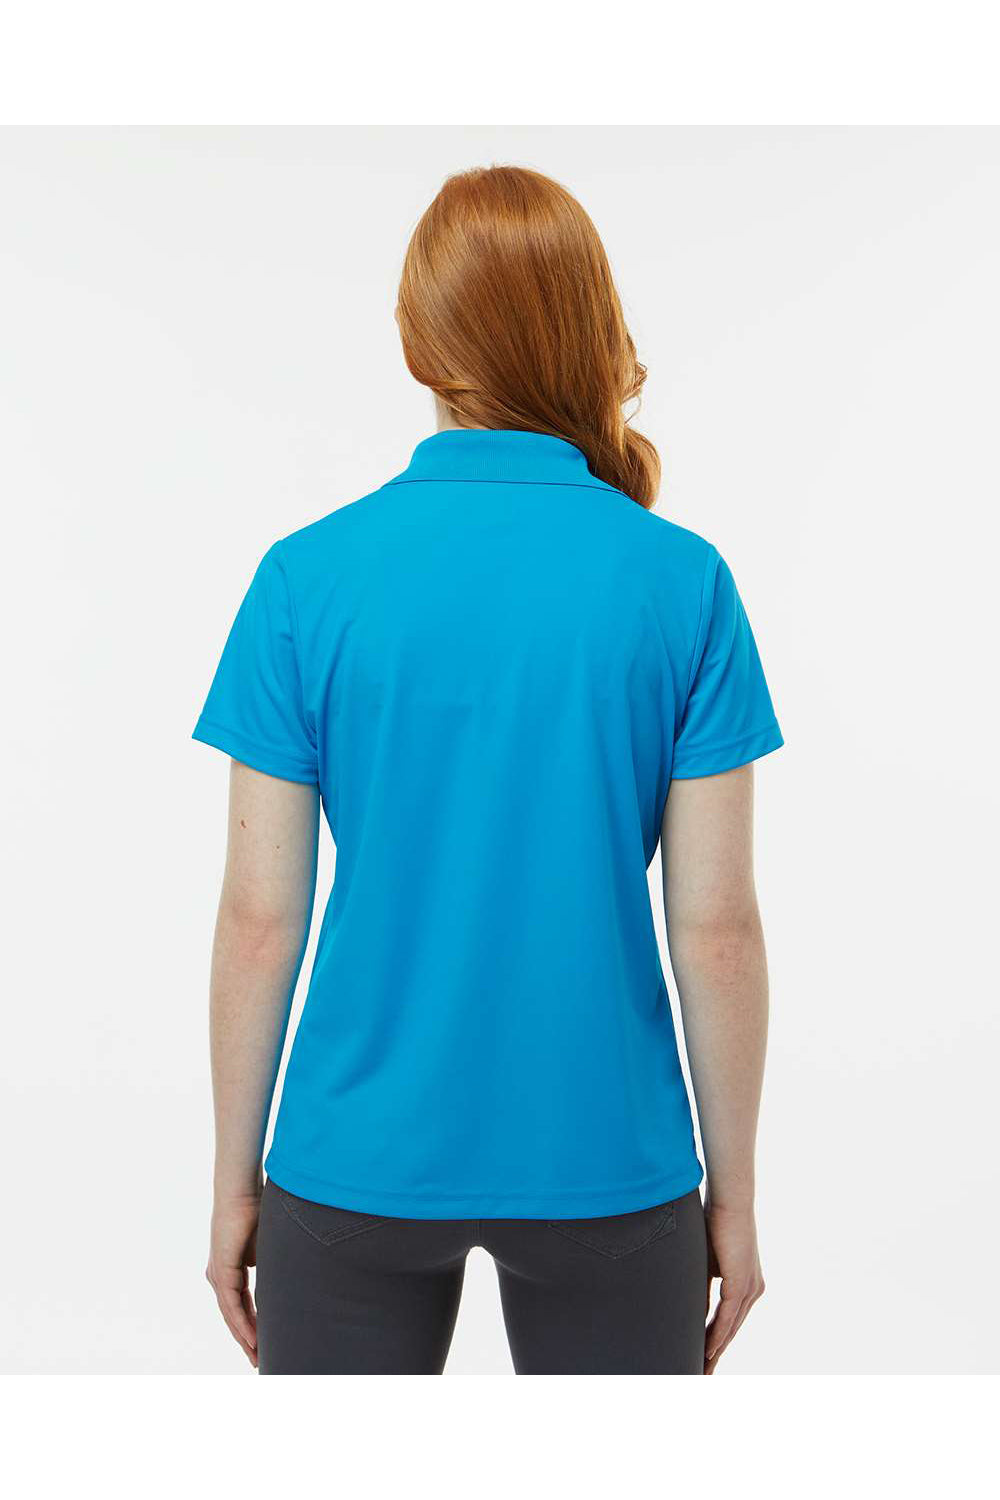 Paragon 504 Womens Sebring Performance Short Sleeve Polo Shirt Turquoise Blue Model Back